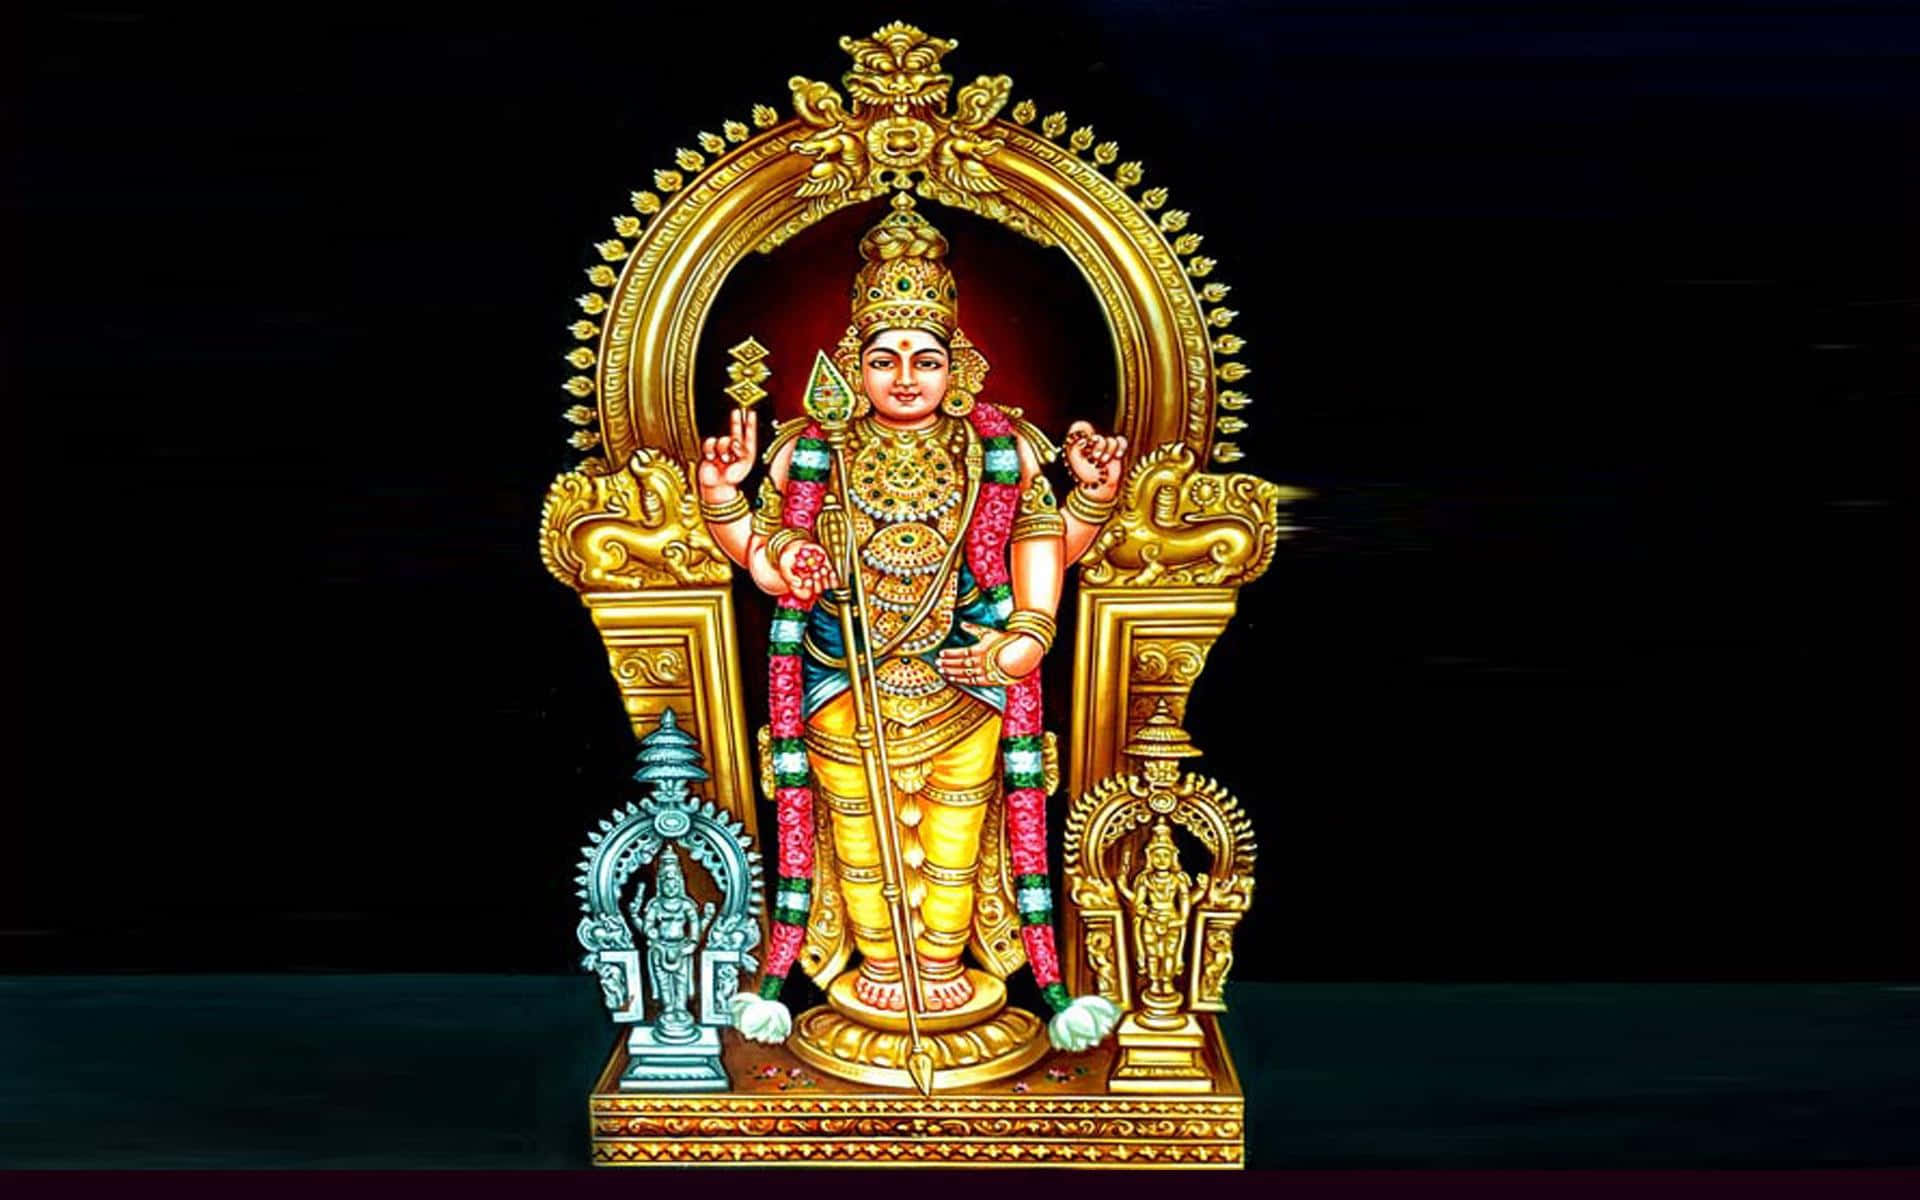 Lord Murugan, the Supreme Being of Tamil Hinduism